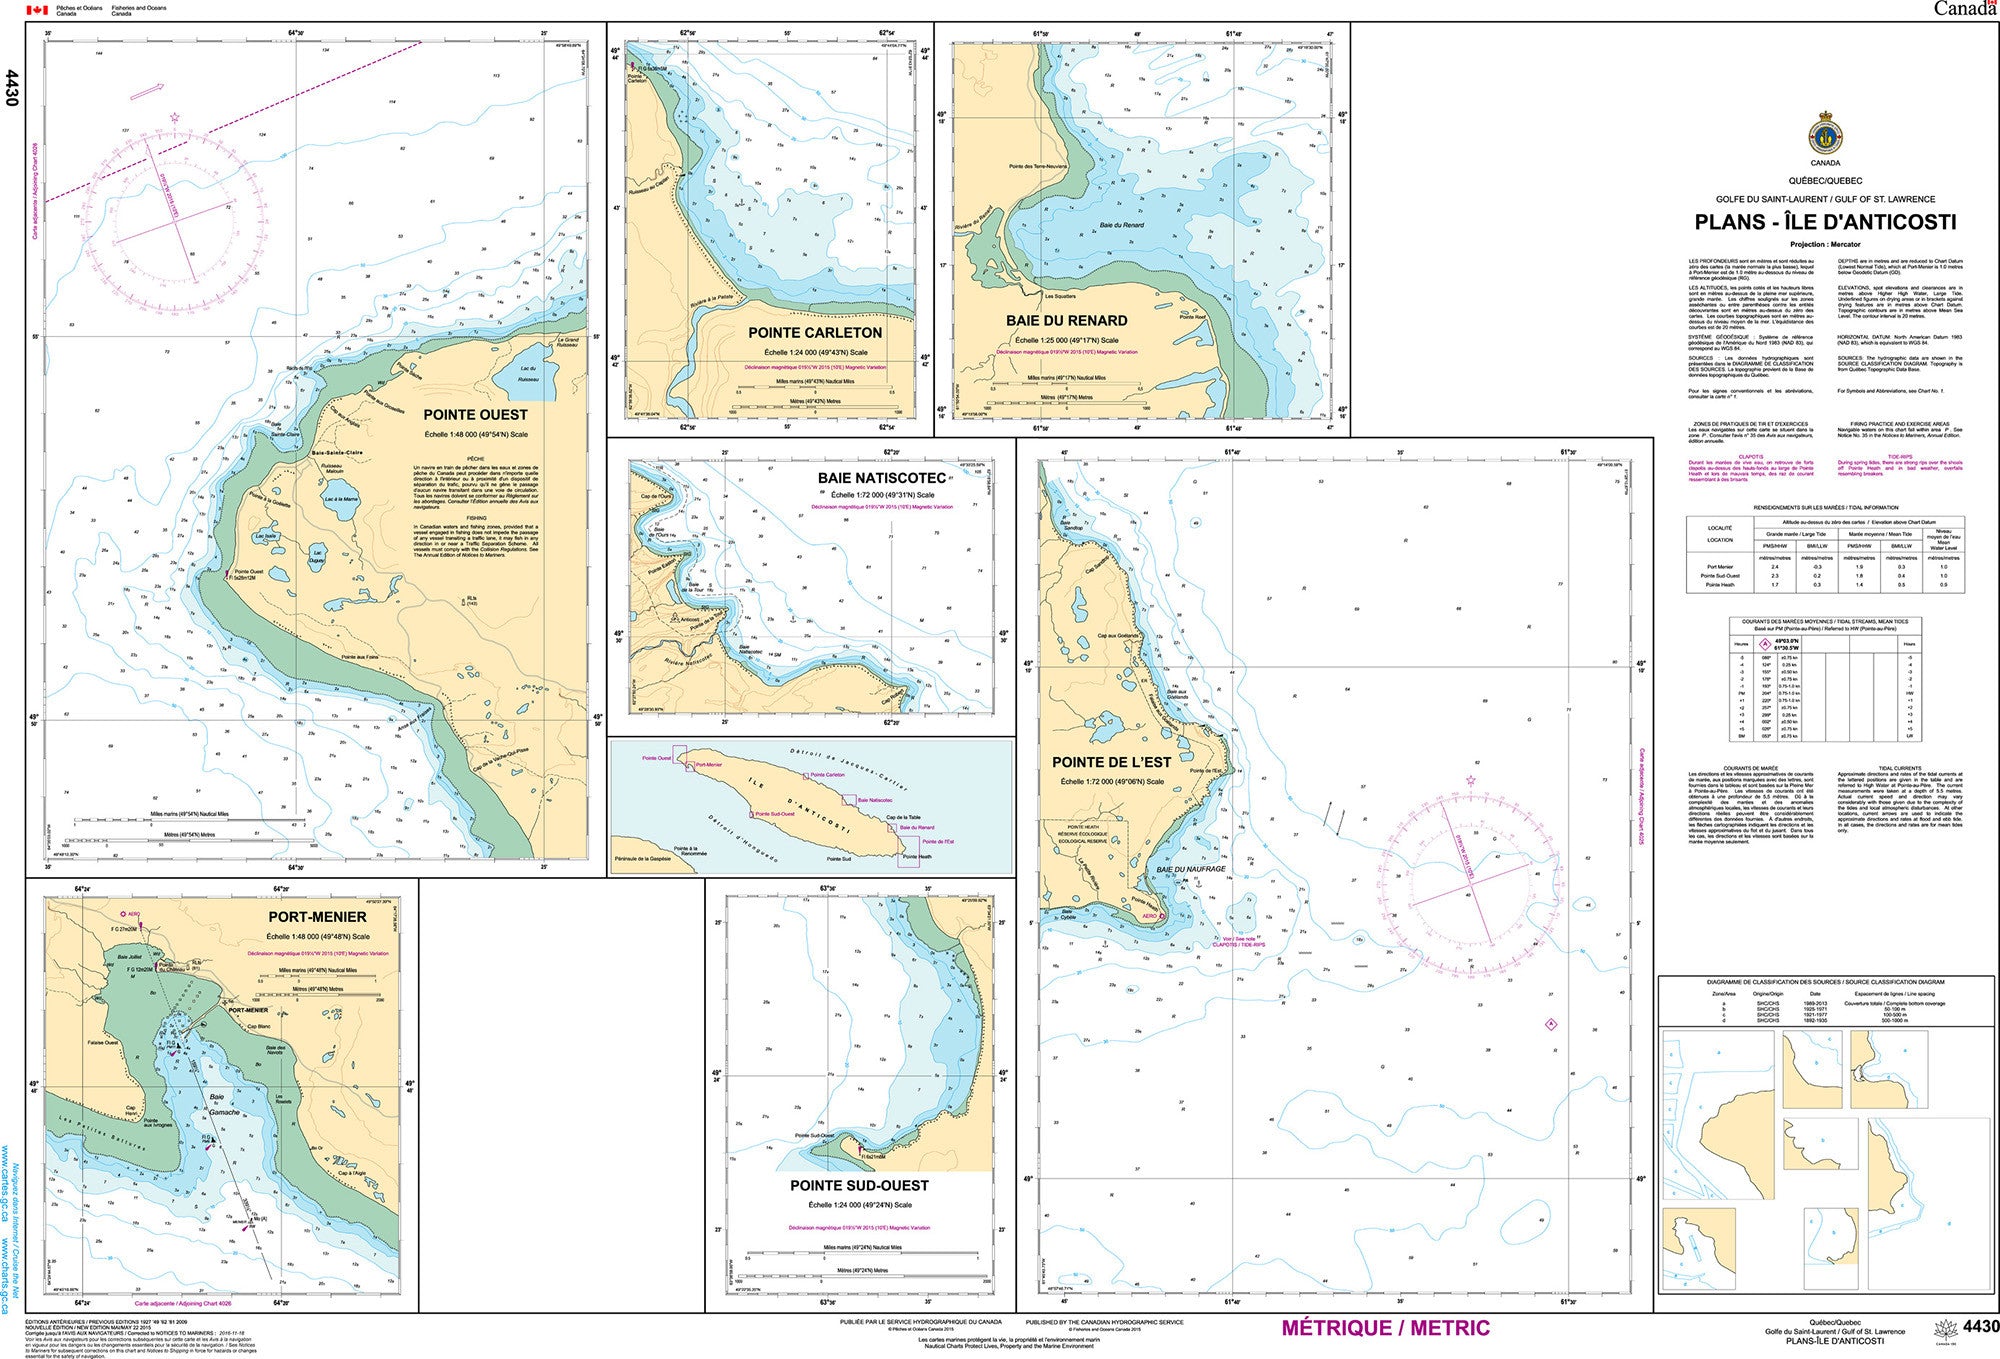 Canadian Hydrographic Service Nautical Chart CHS4430: Plans - Île D'Anticosti